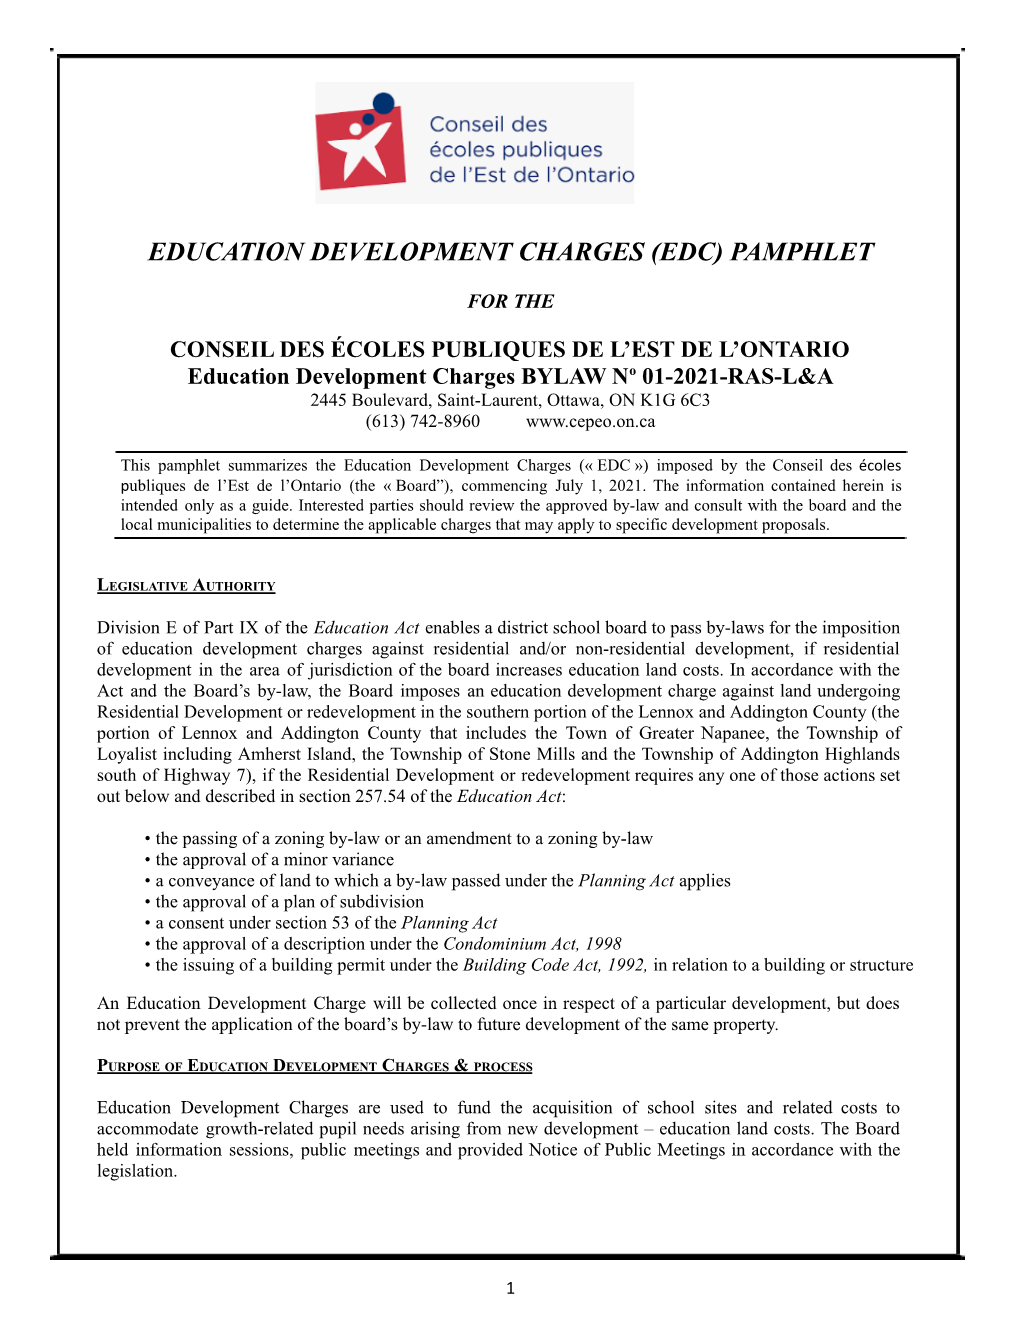 Education Development Charges (Edc) Pamphlet